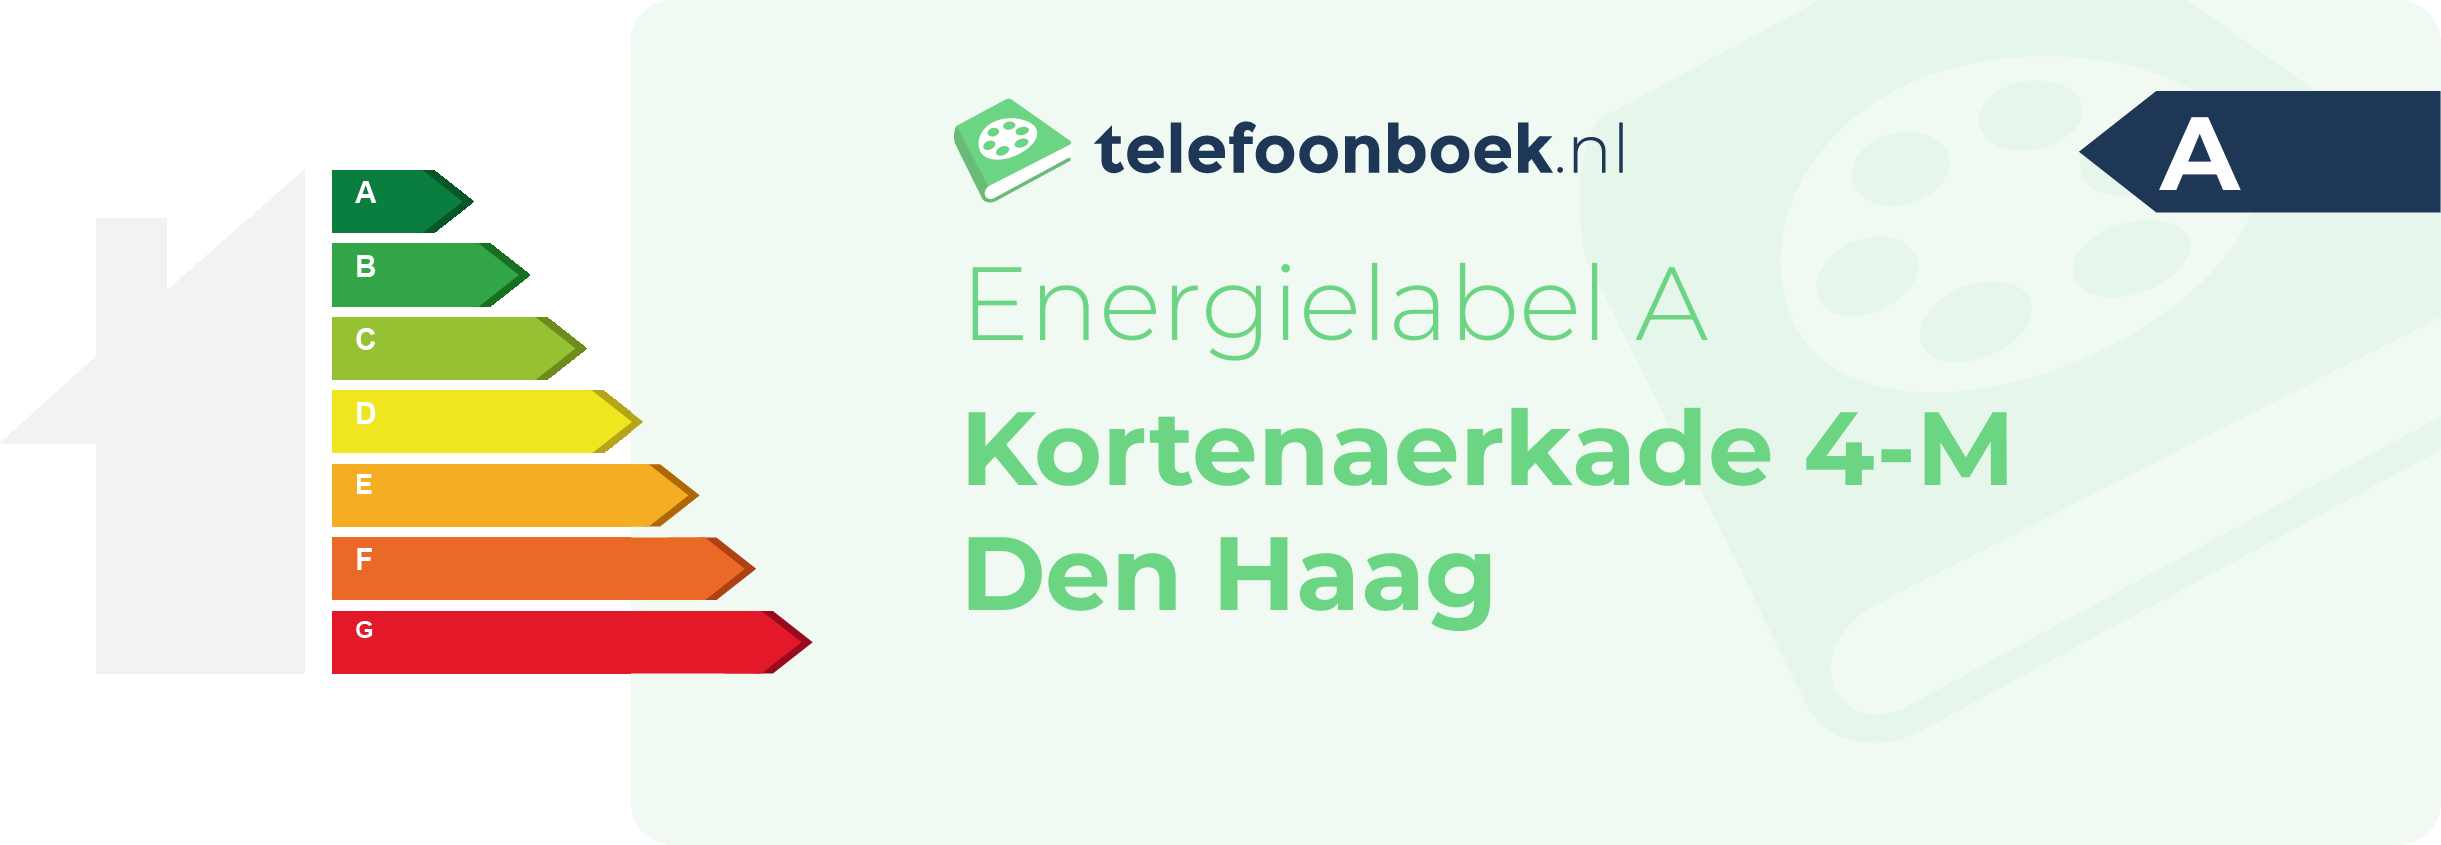 Energielabel Kortenaerkade 4-M Den Haag